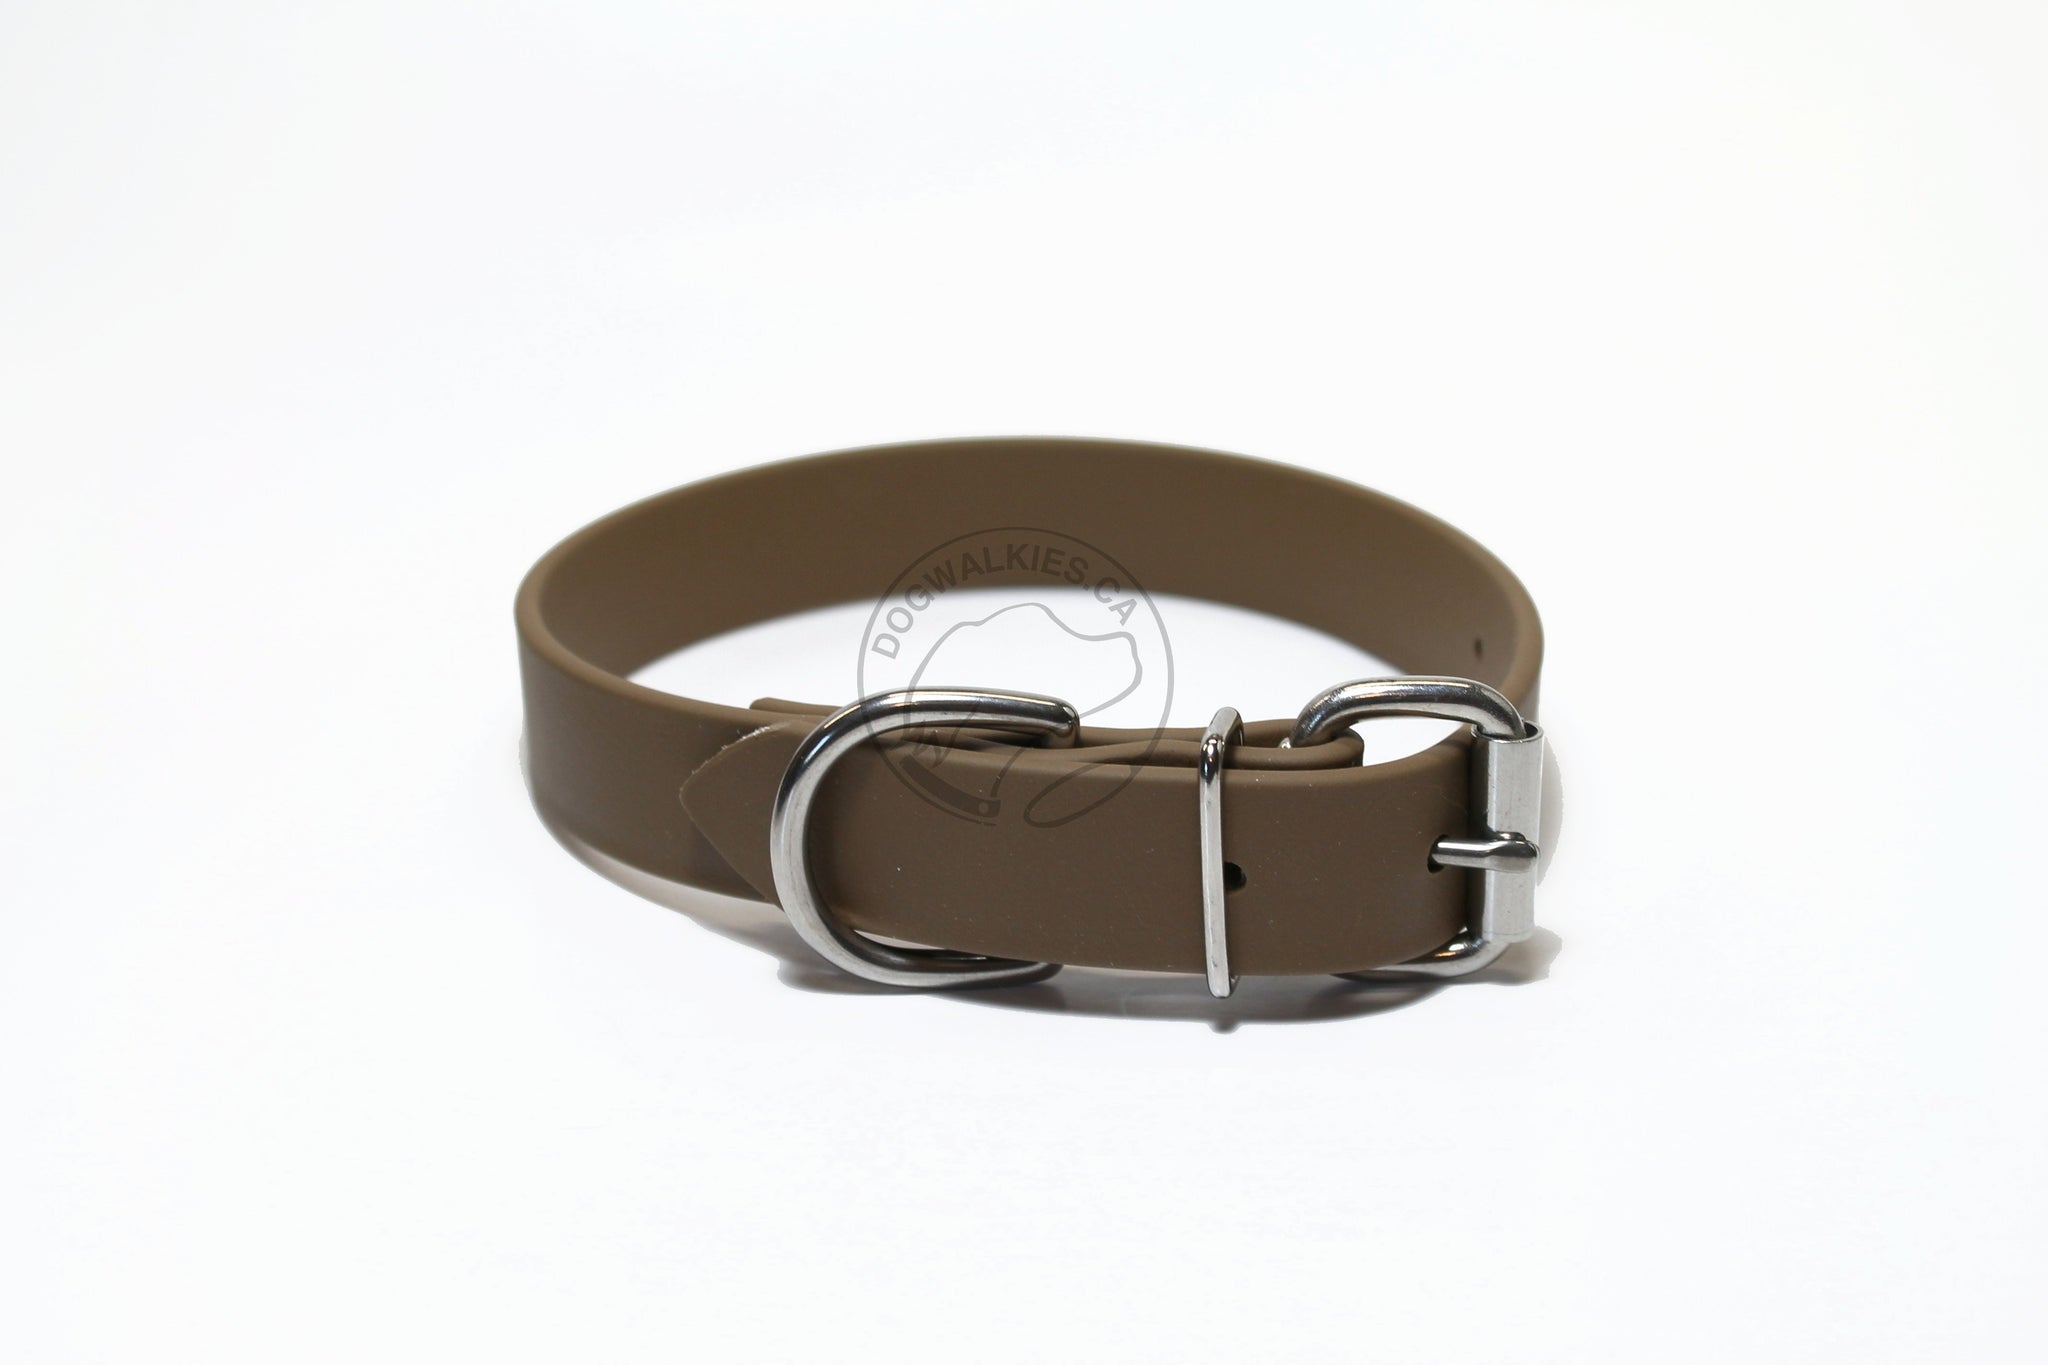 Coyote Tan Biothane Dog Collar - 1 inch (25mm) wide